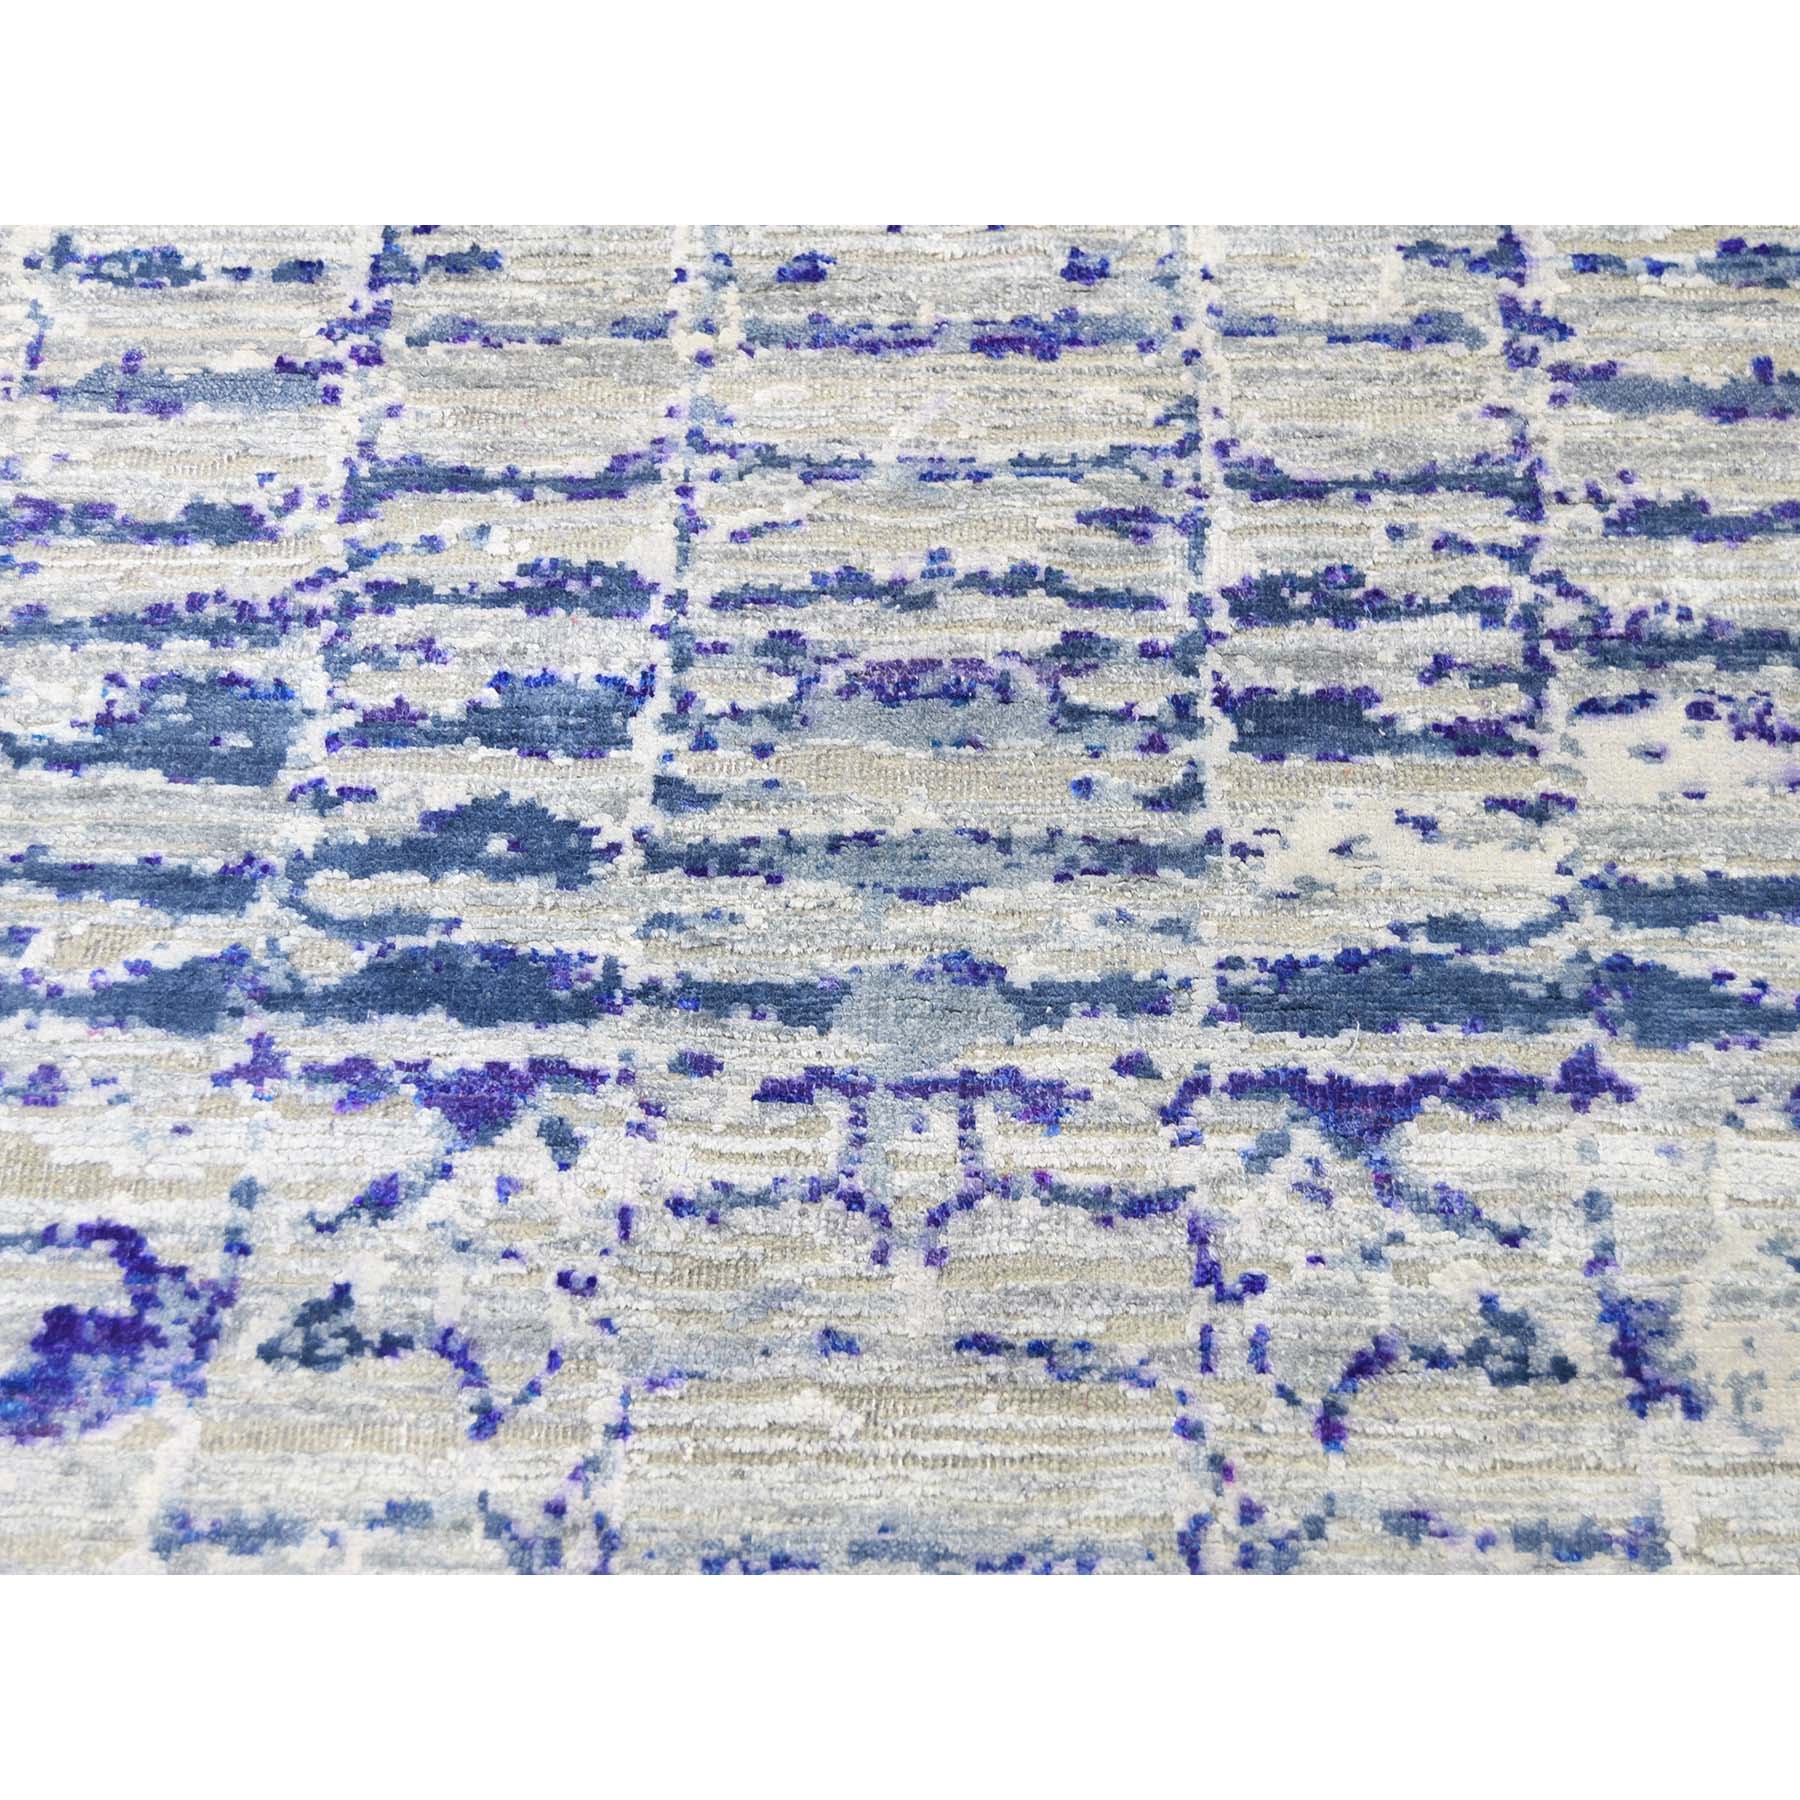 10-2 x13-10  Sari Silk Diminishing Bricks Hand-Knotted Oriental Rug 